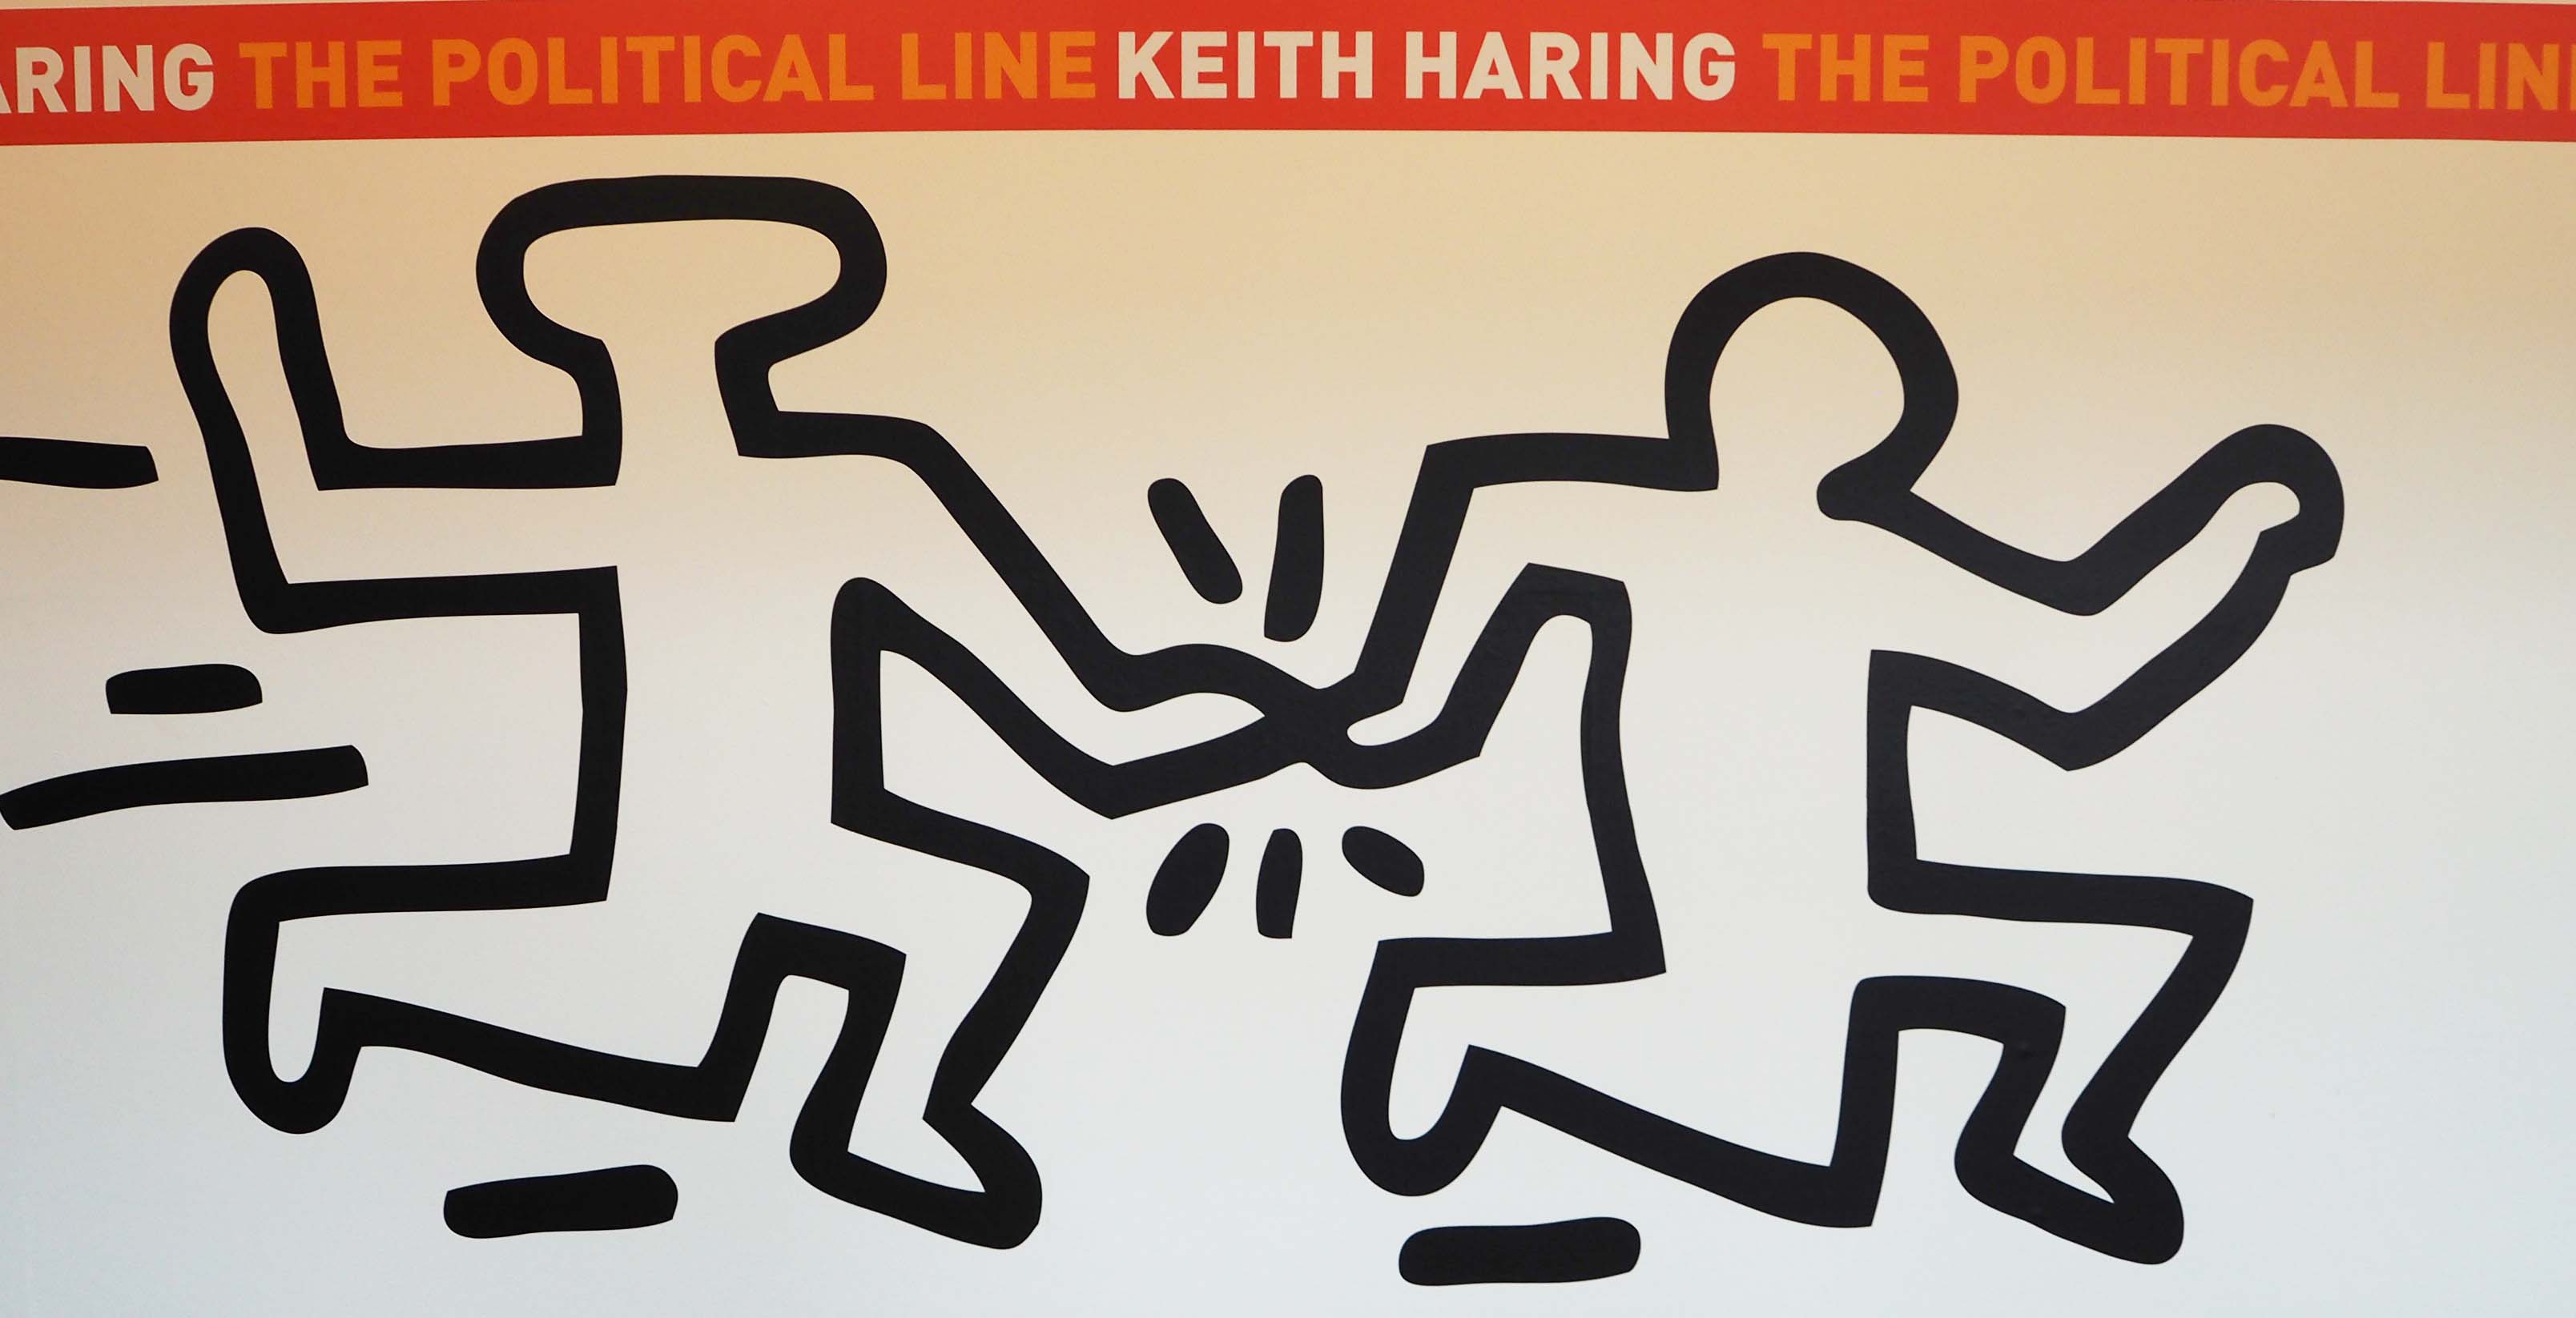 Keith-Haring-oproep-wereld-aids-dag-Beurs-metro-rotterdam